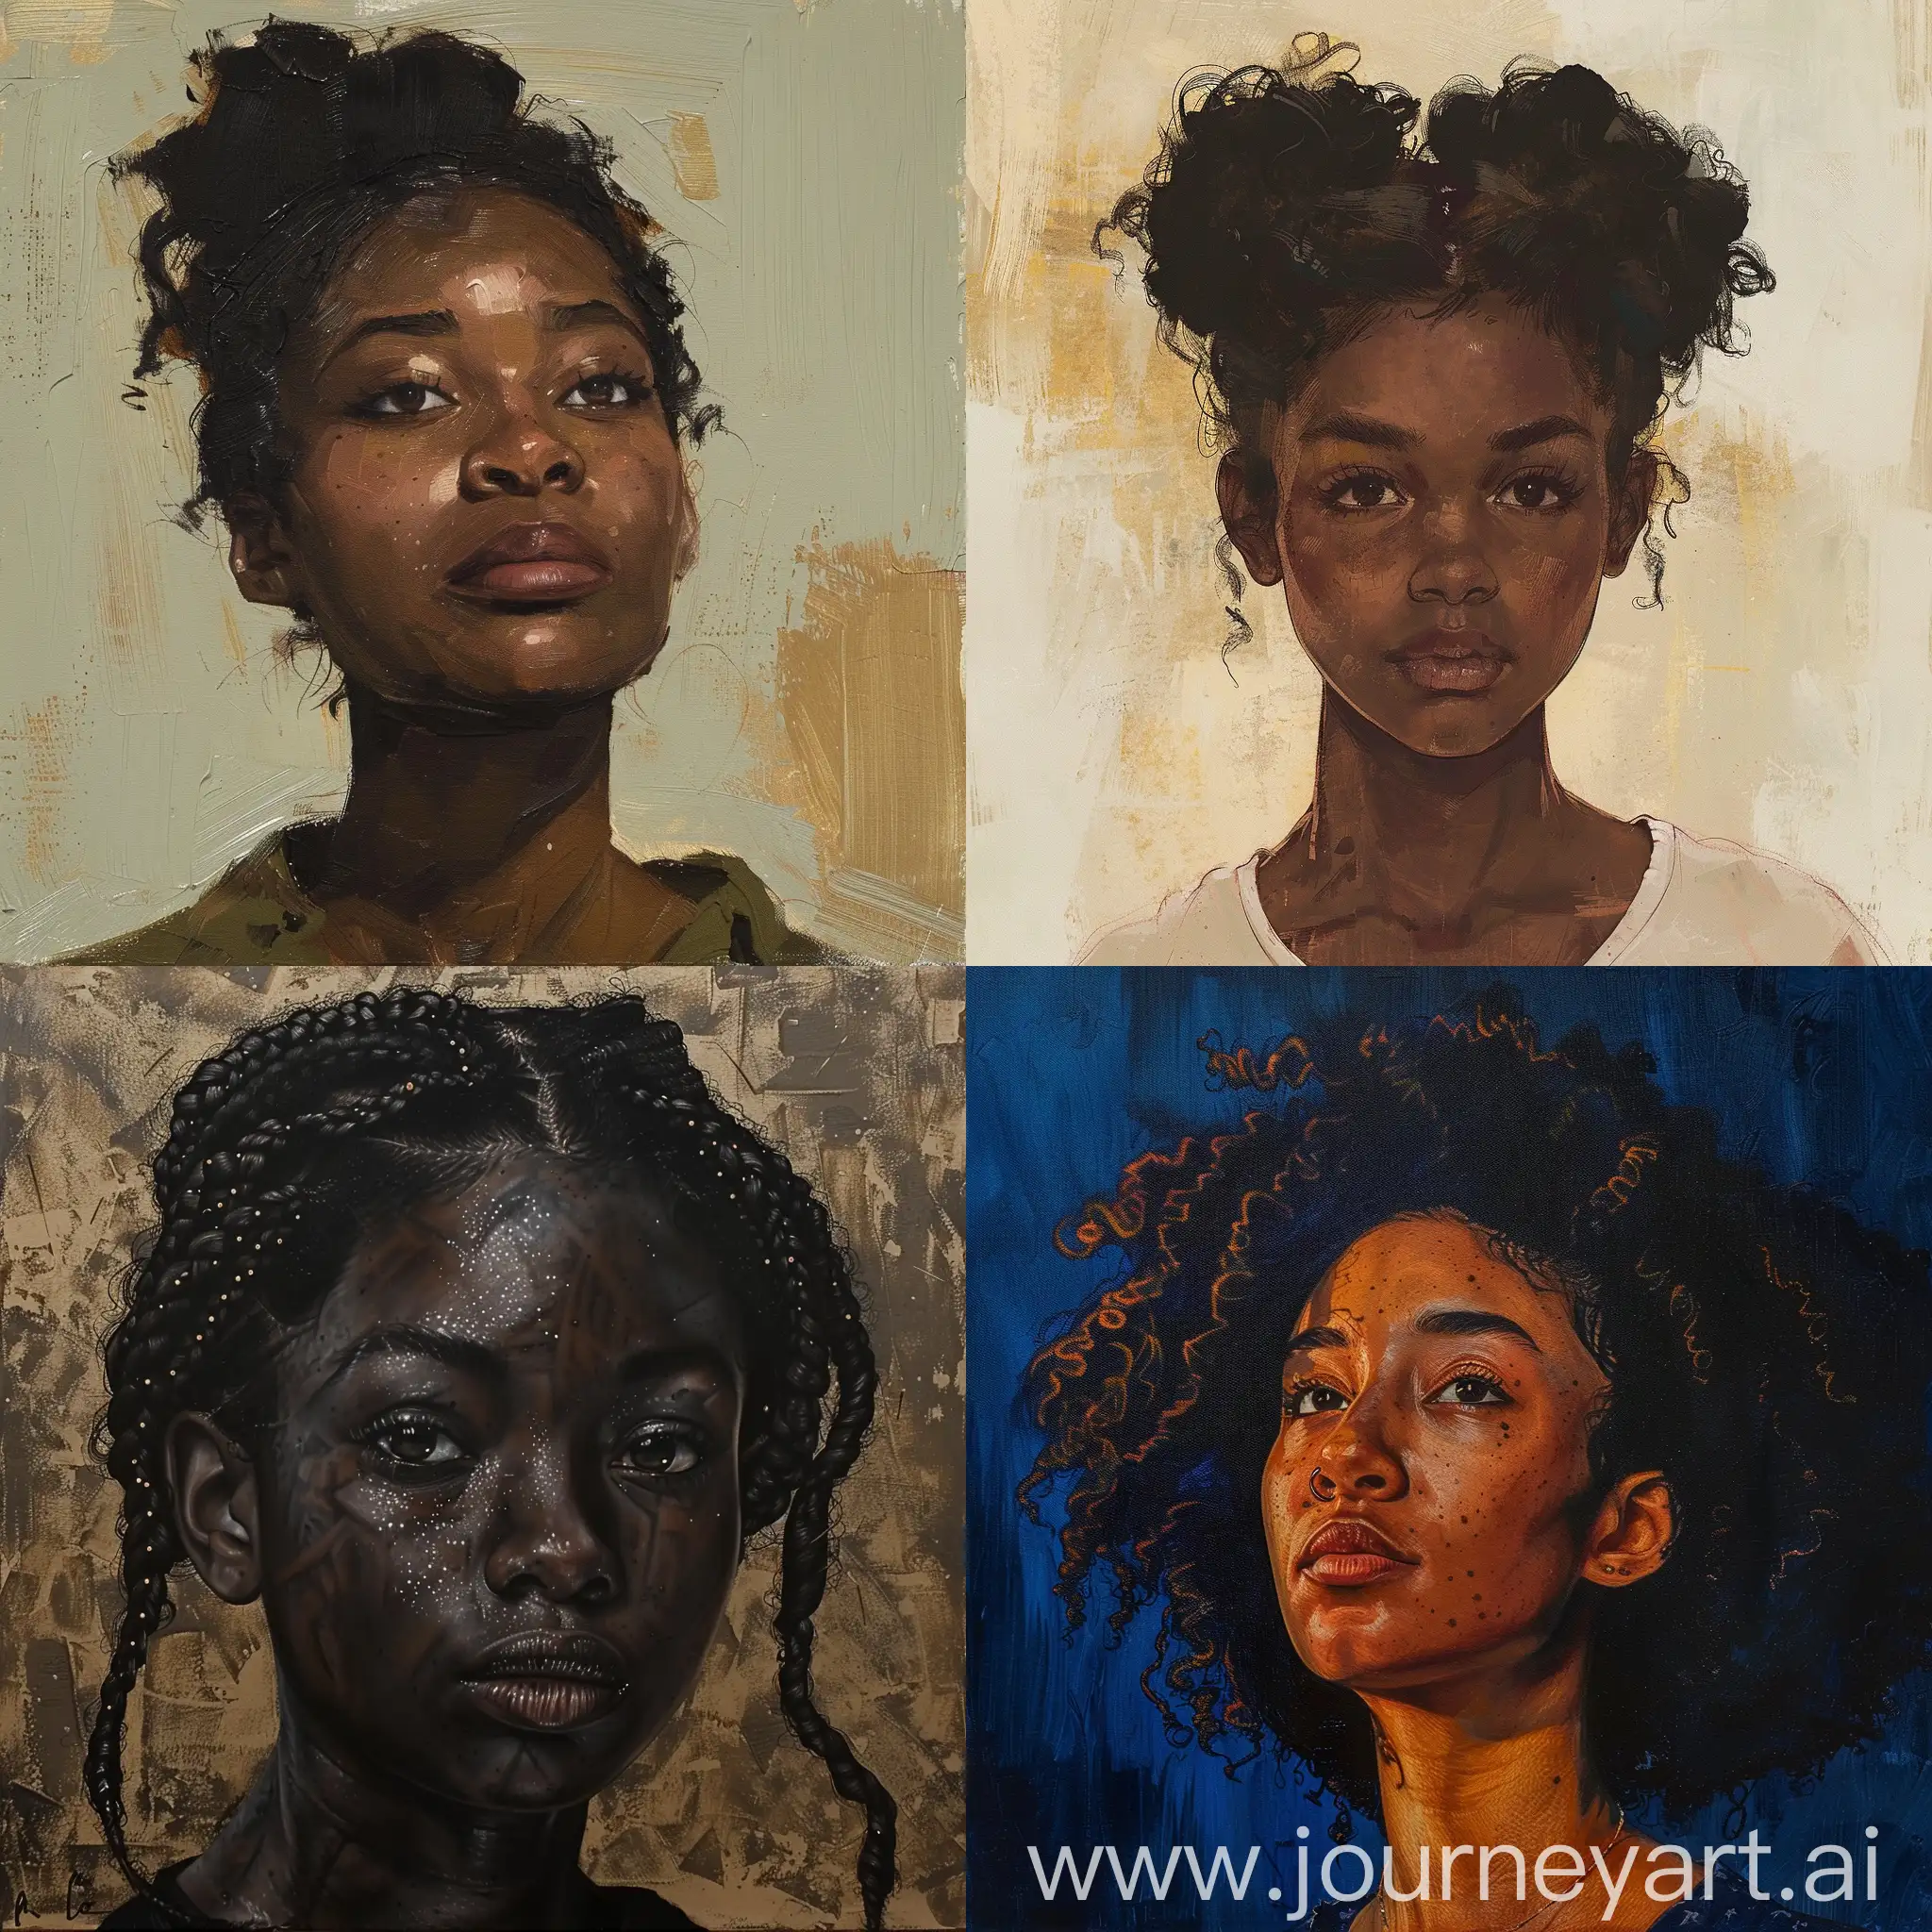 A portrait of a black girl